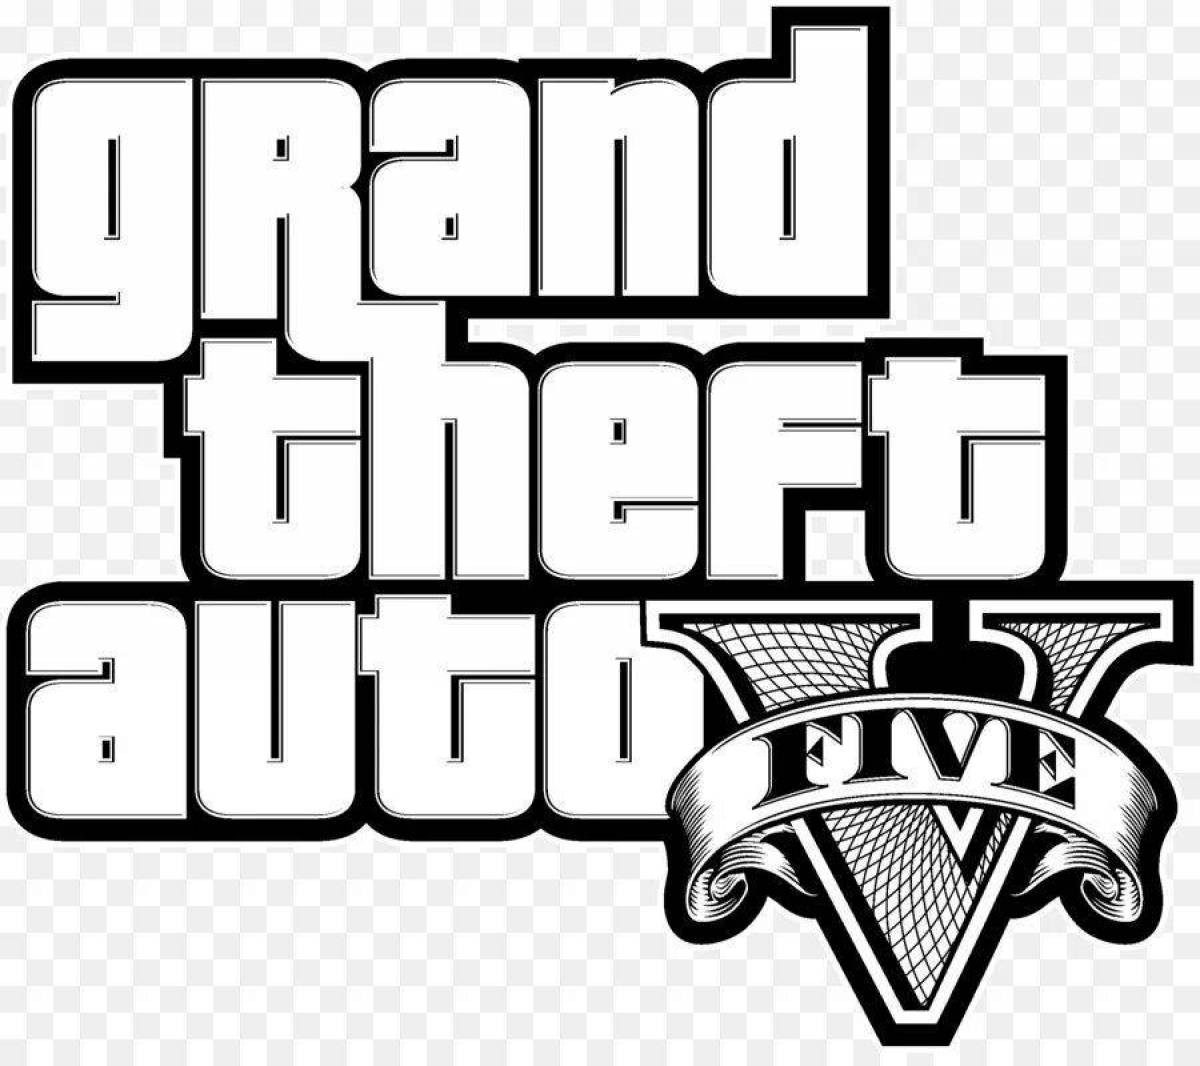 Grand Theft auto 5 logo